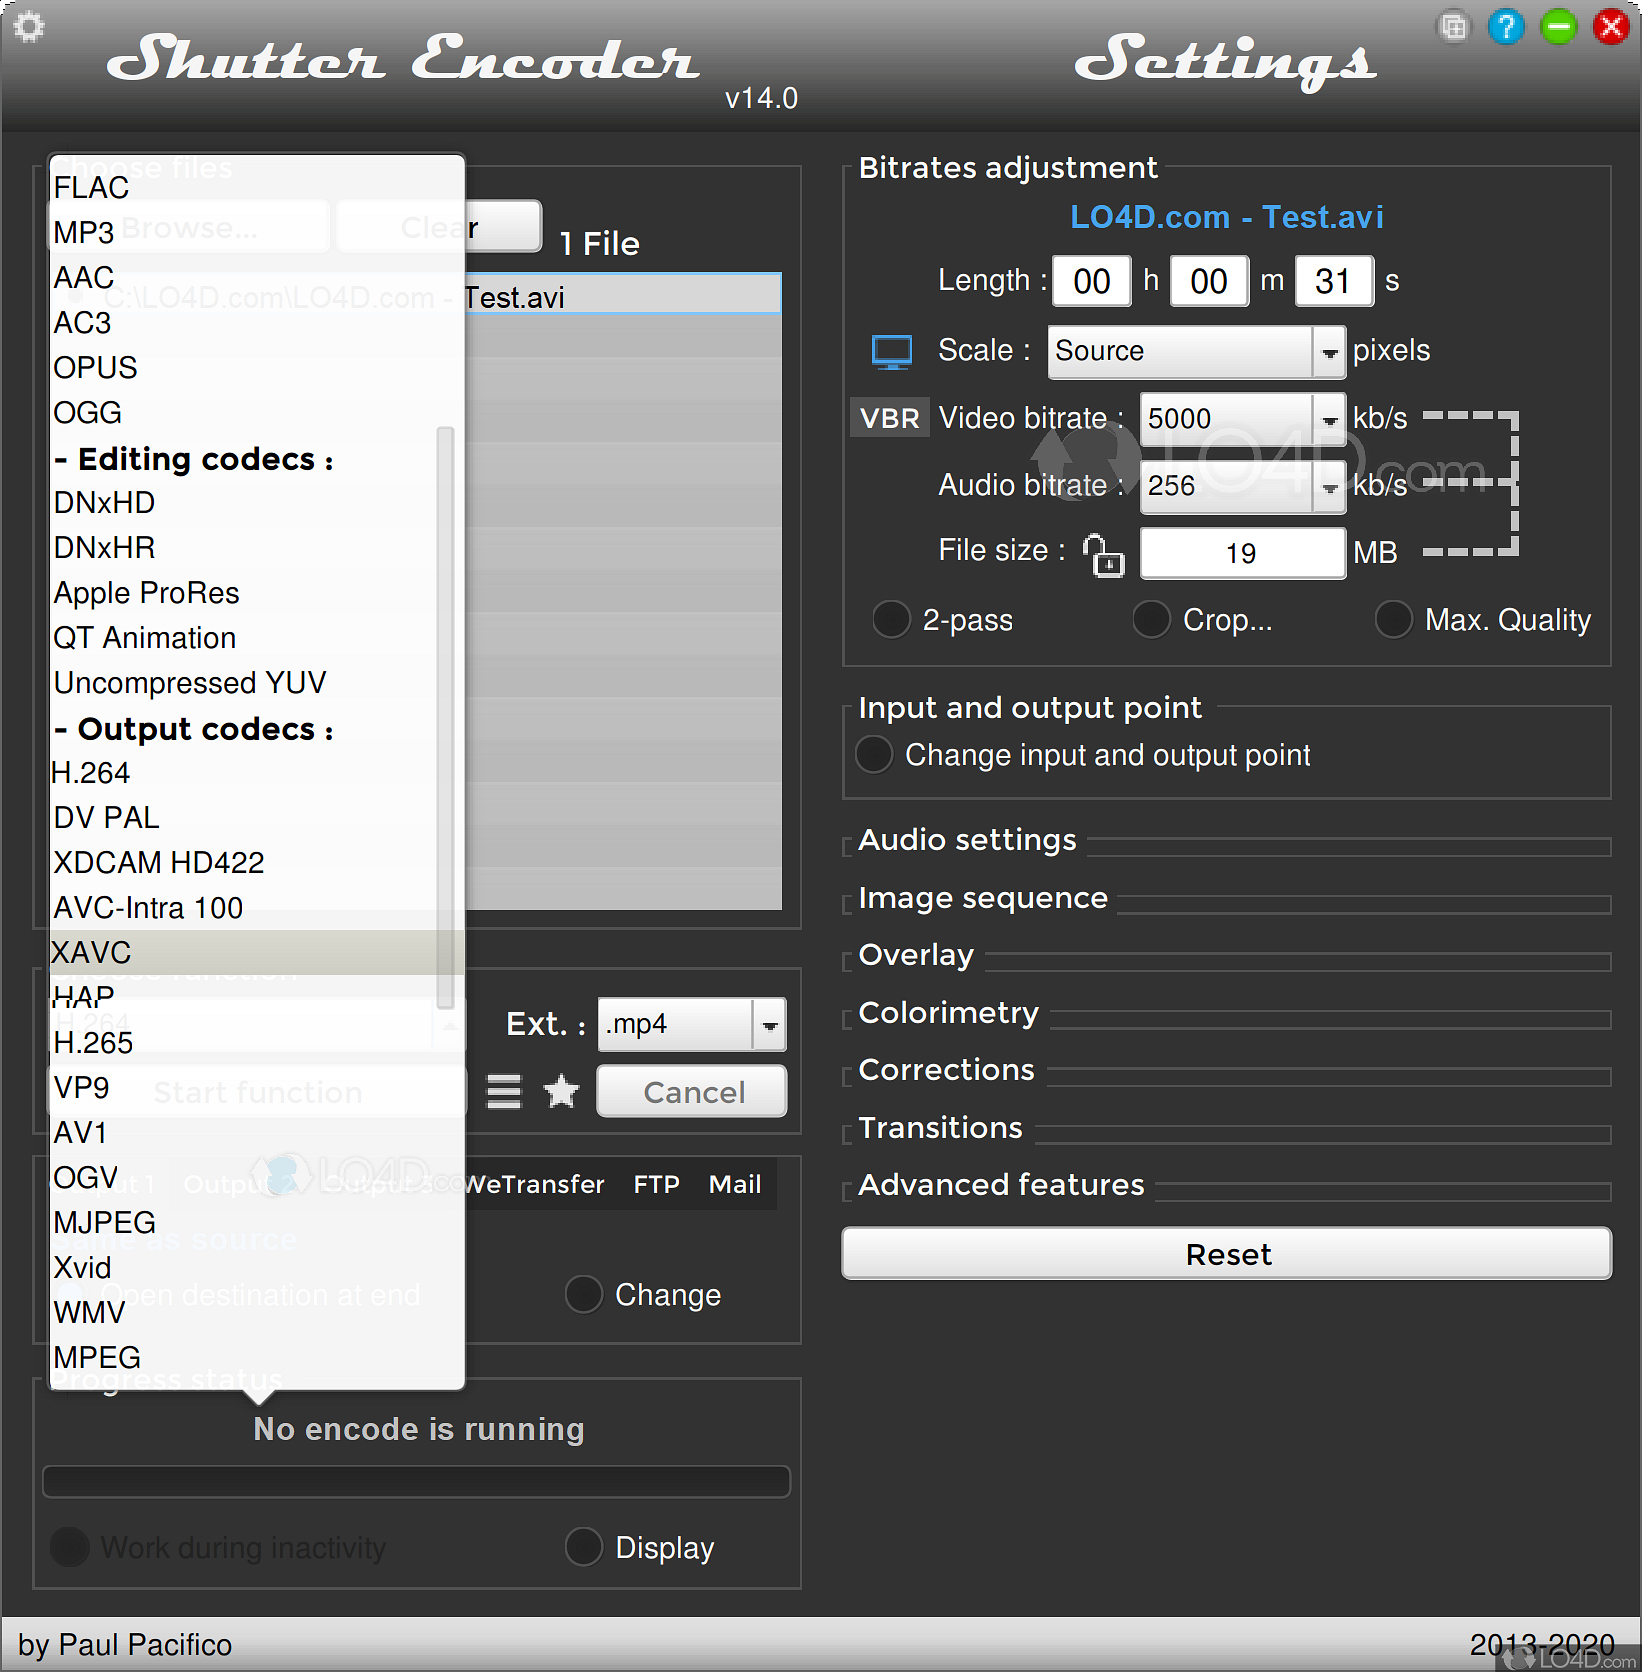 Shutter Encoder 17.3 download the new for apple